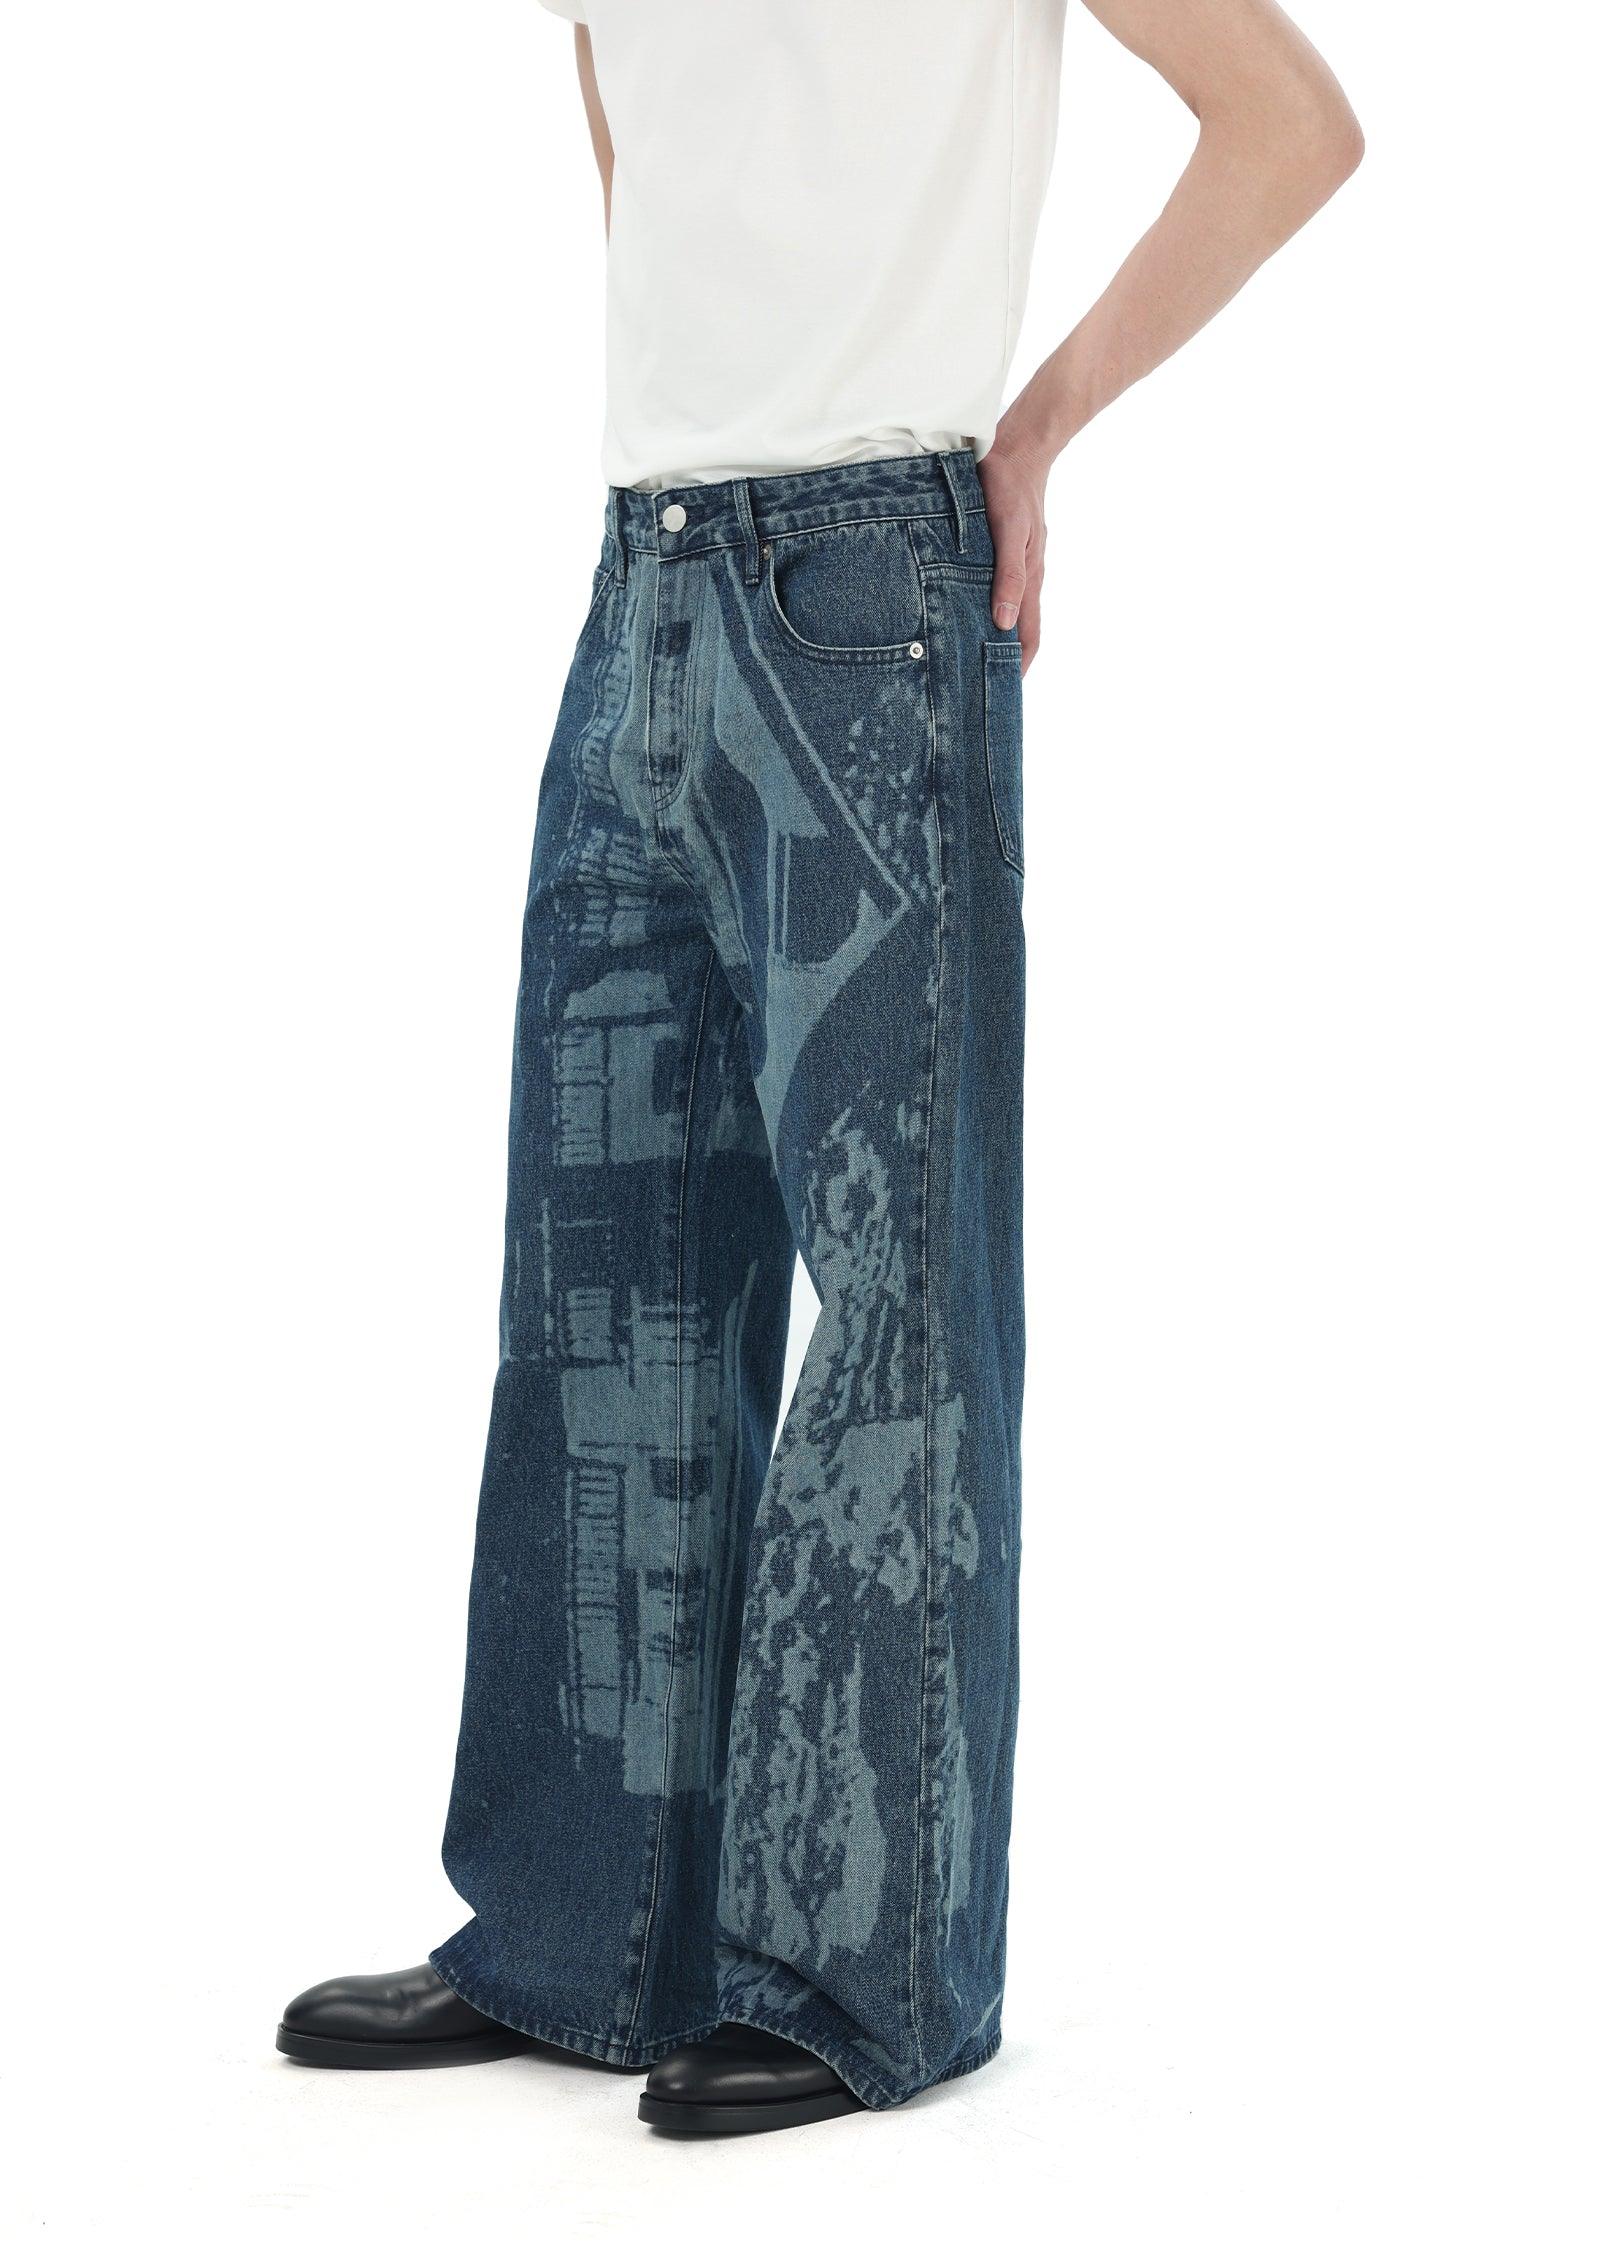 Architectural Print Flared Denim Jeans - chiclara